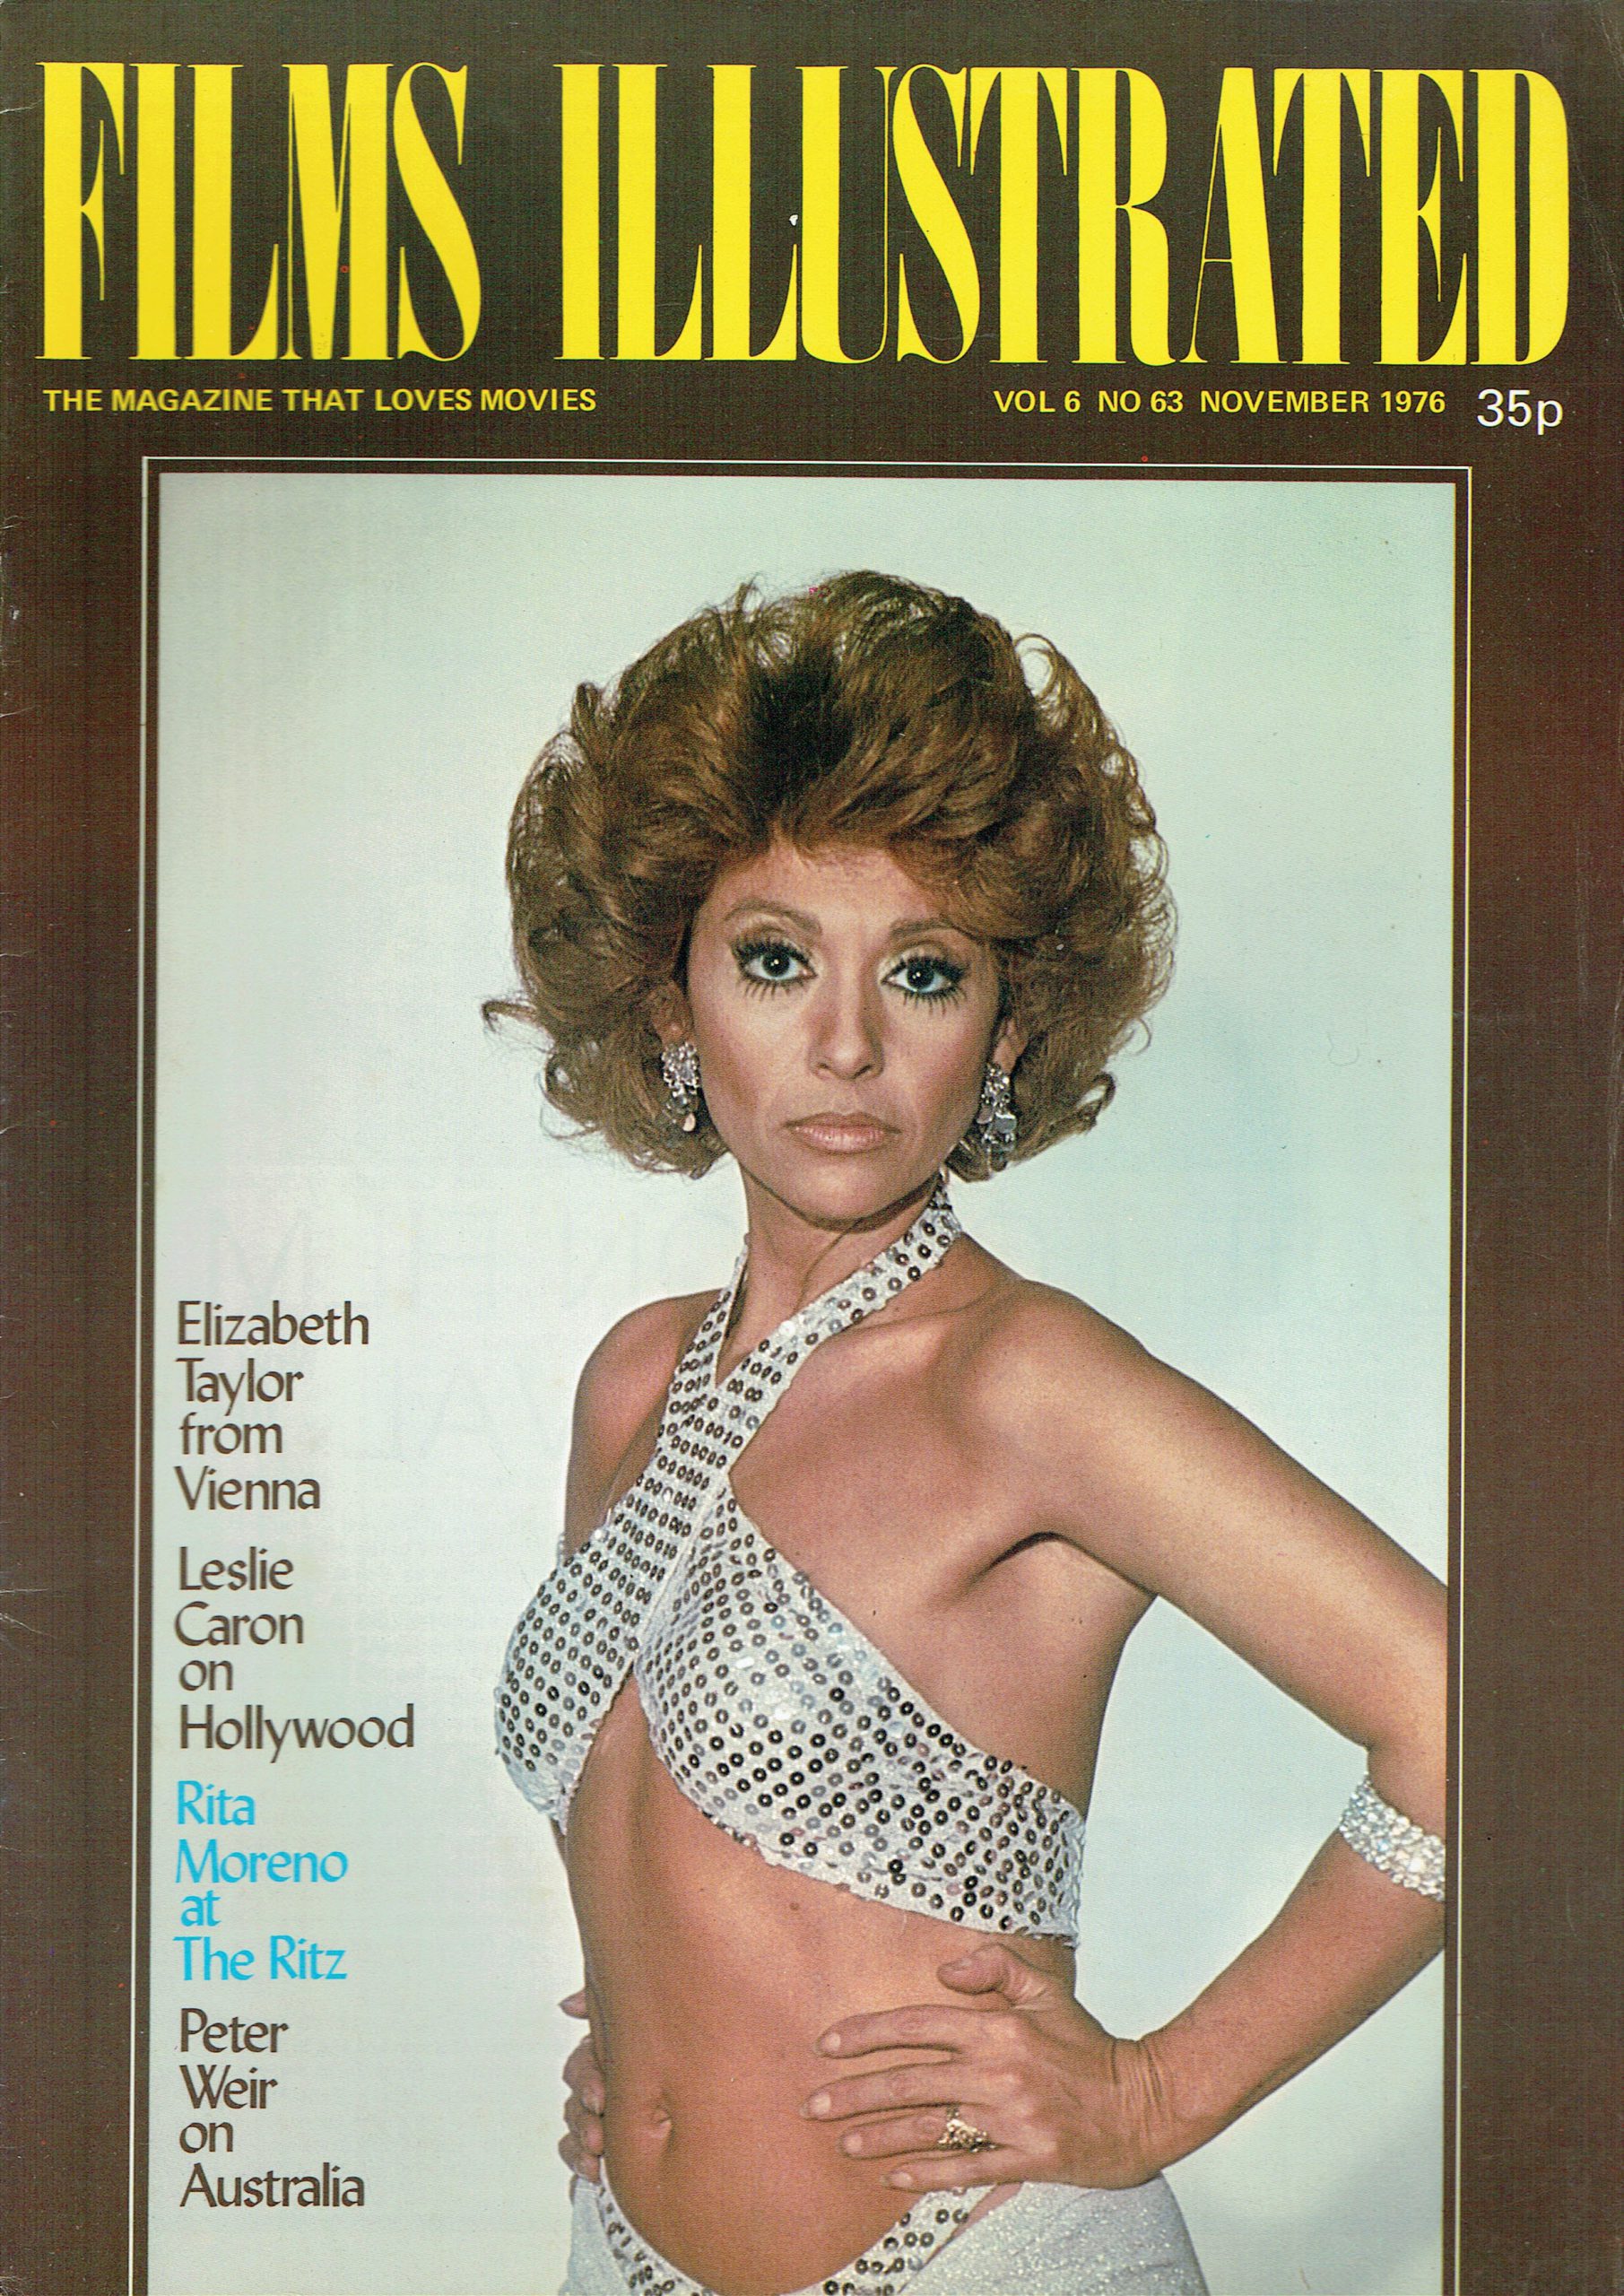 FILMS ILLUSTRATED UK MAGAZINE NOVEMBER 1976 LESLIE CARON Vintage and Modern  Magazines - Vintage Magazines